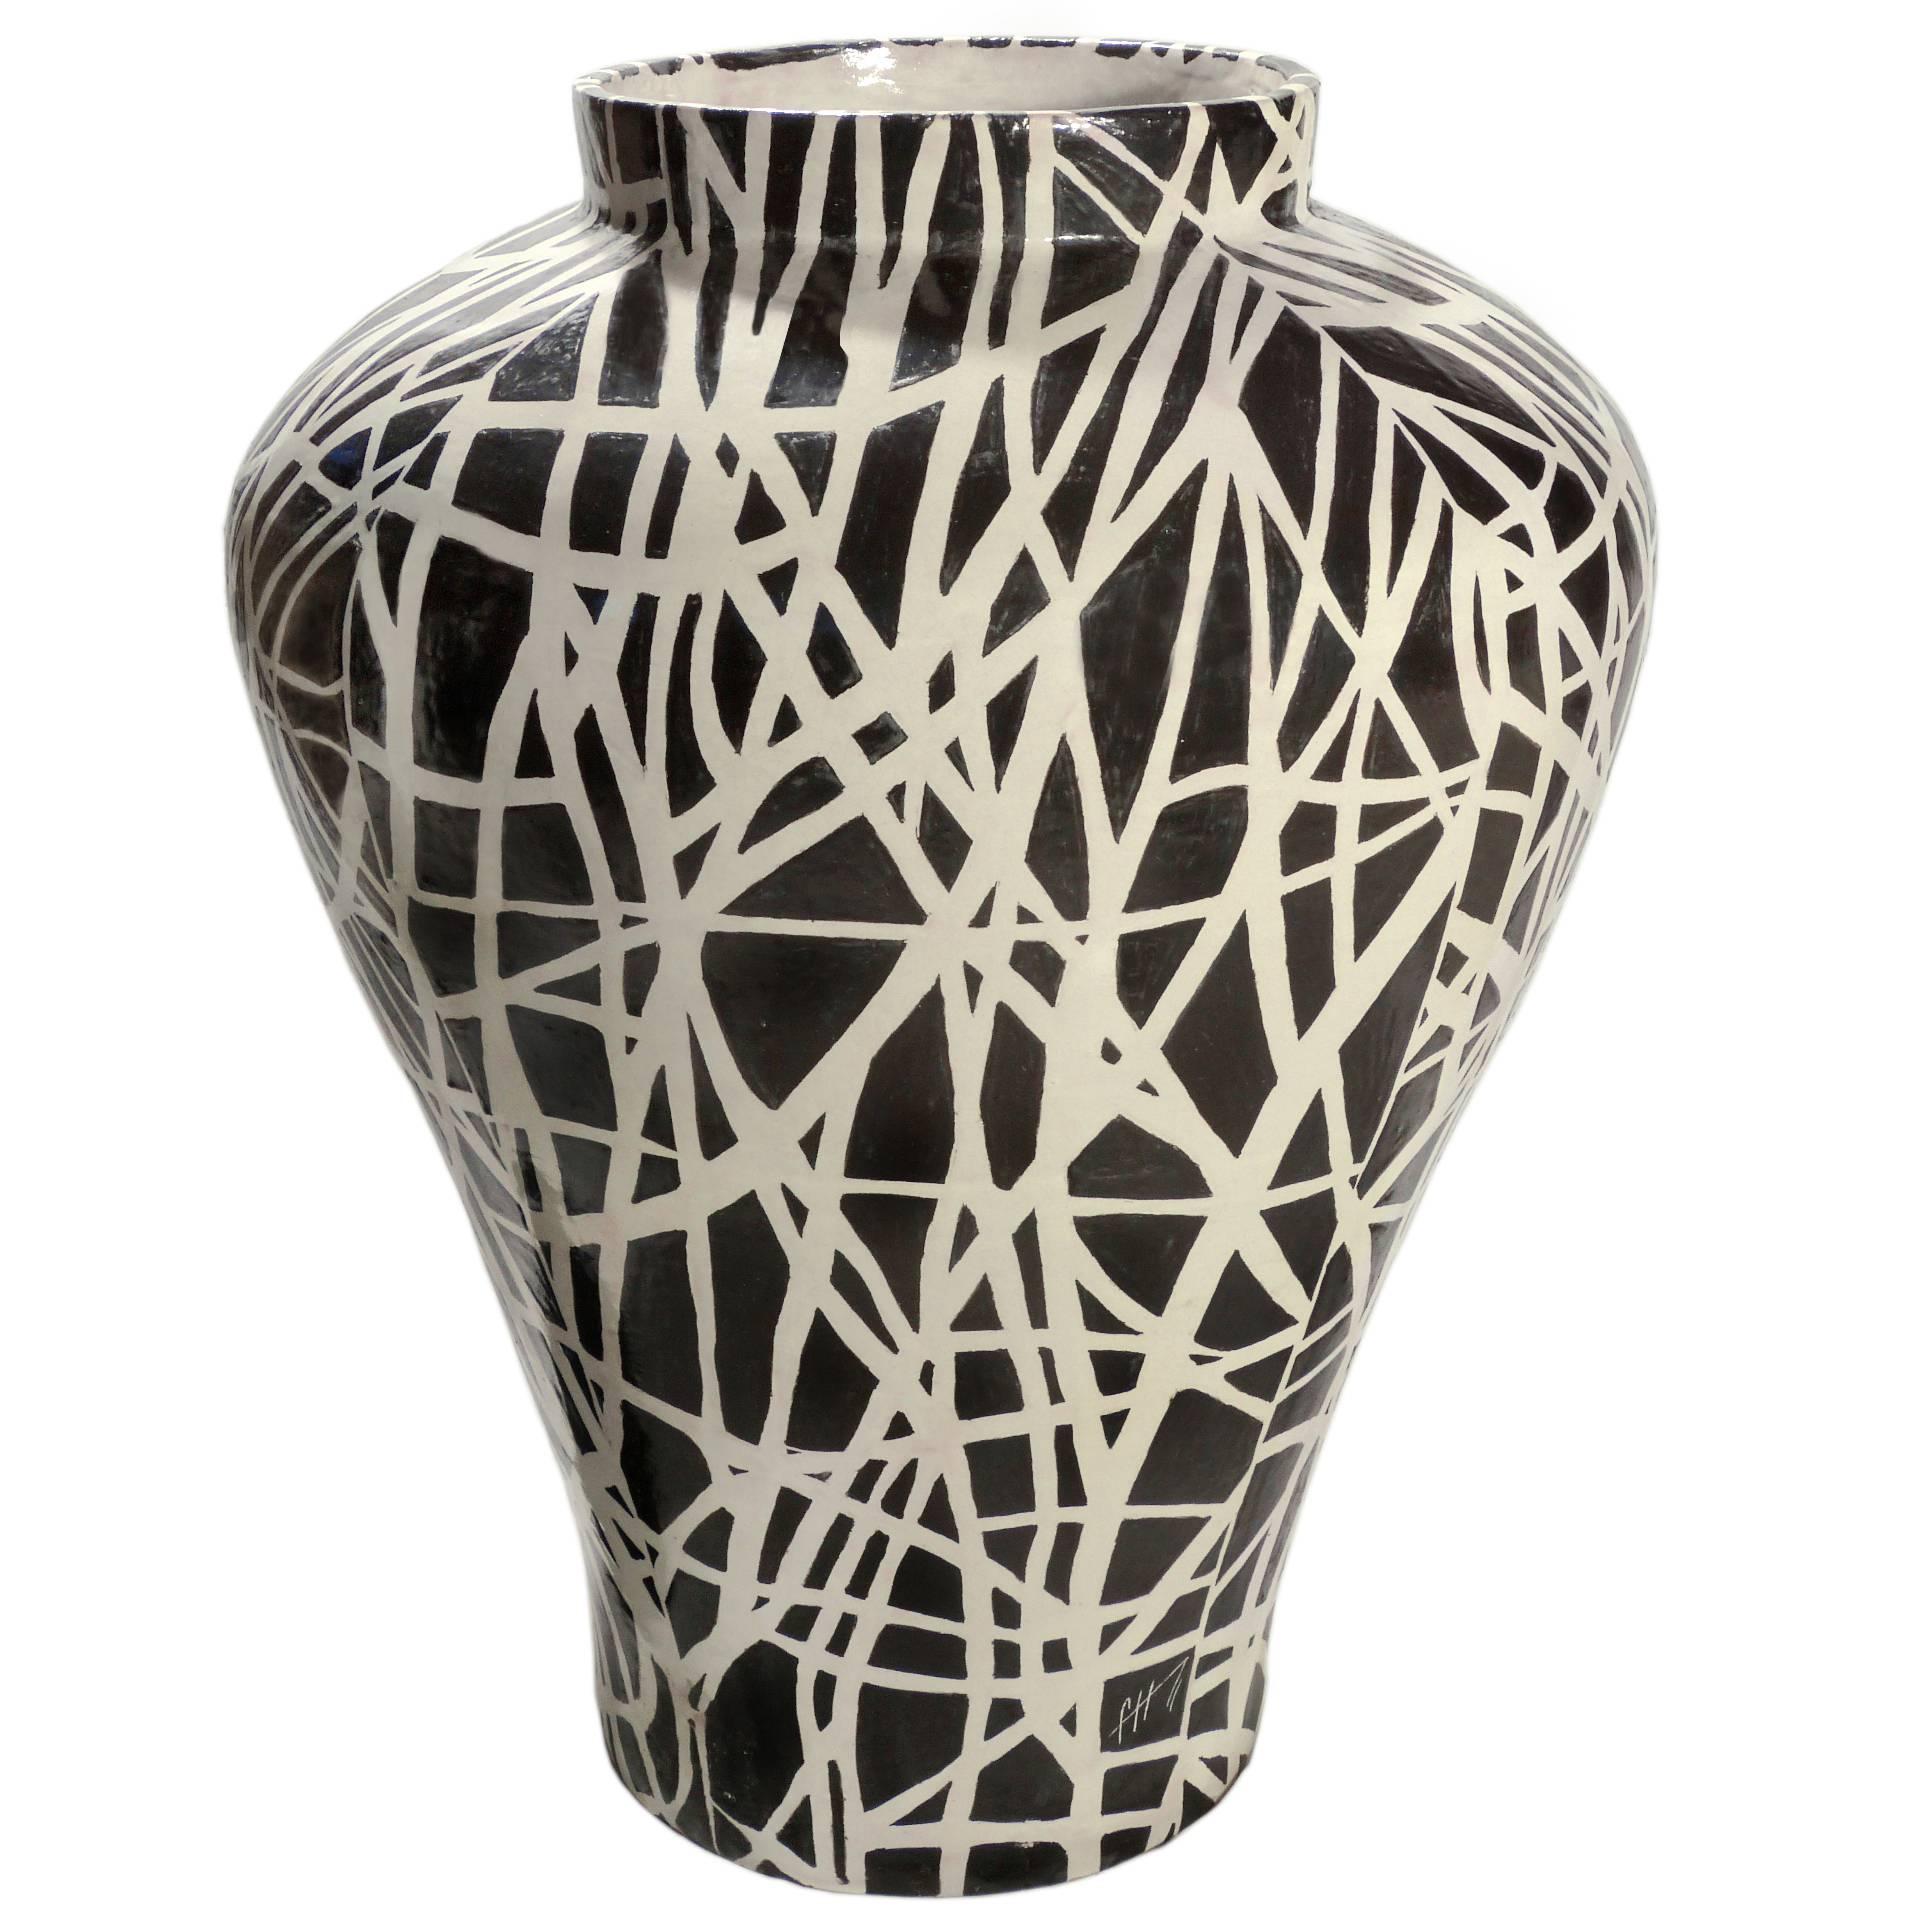 Jan Hendrix Black and White Ceramic Vase For Sale